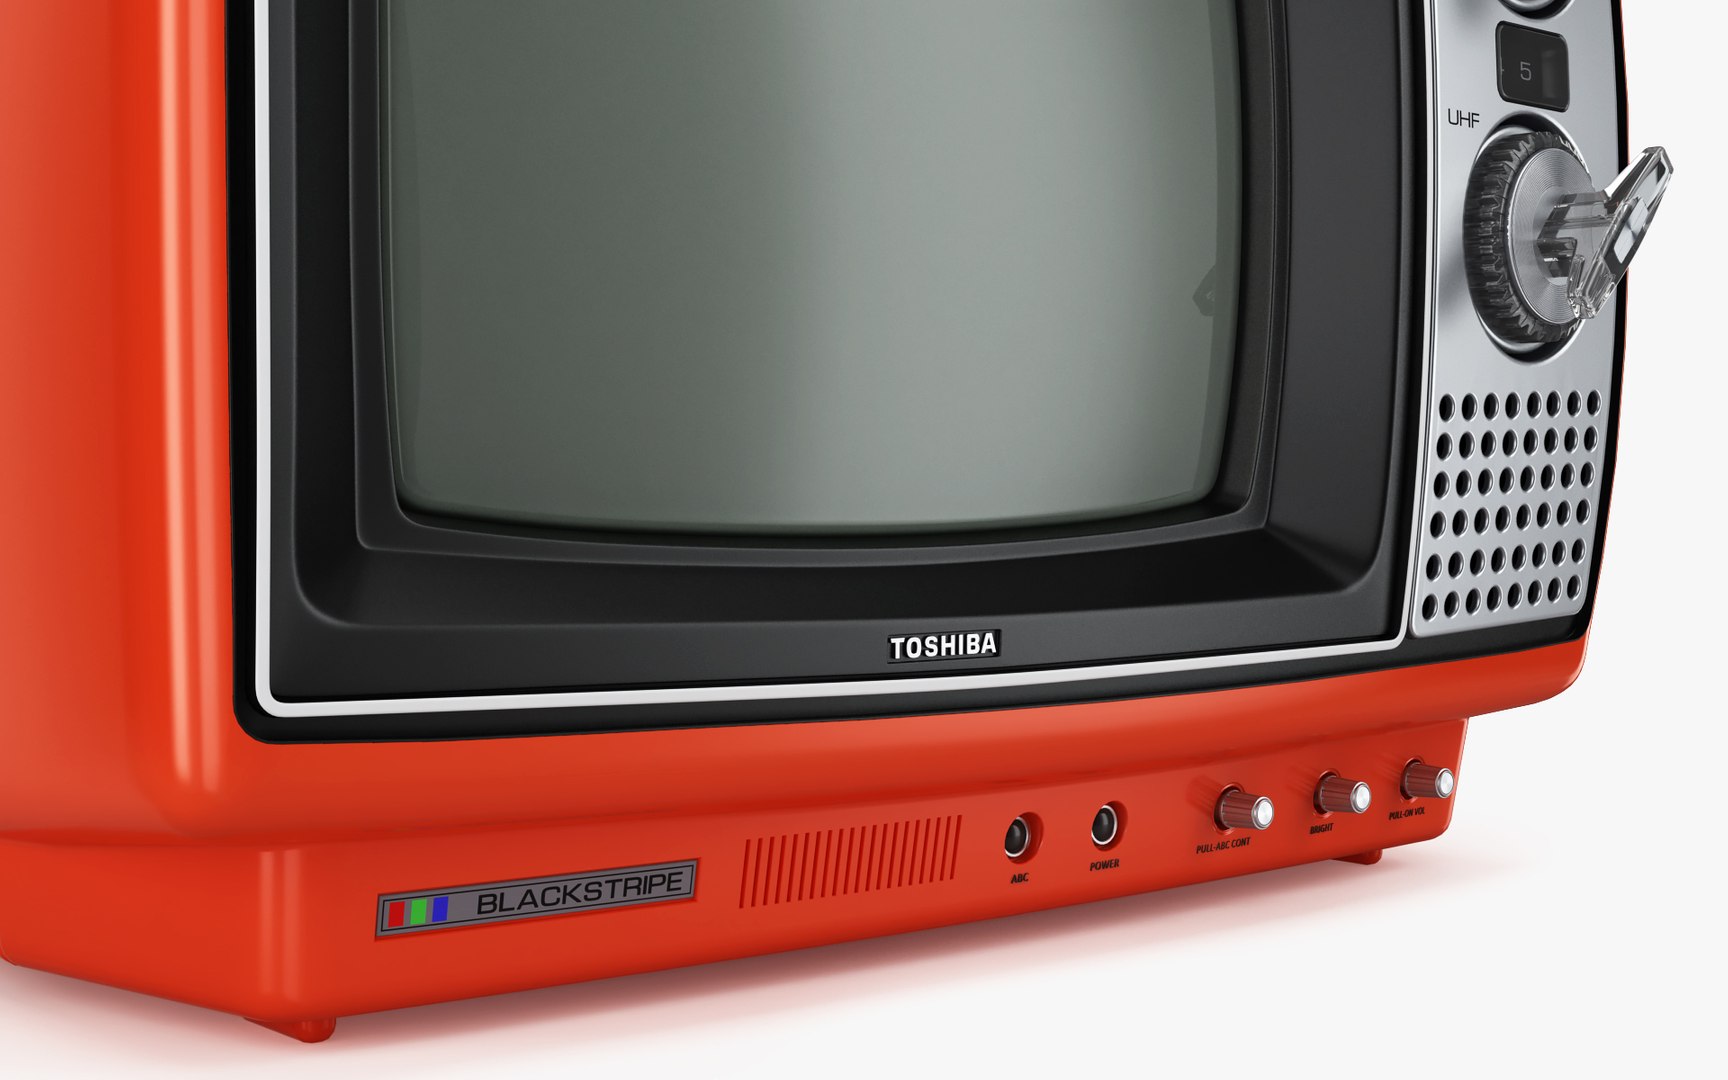 Toshiba Blackstripe Portable Television 